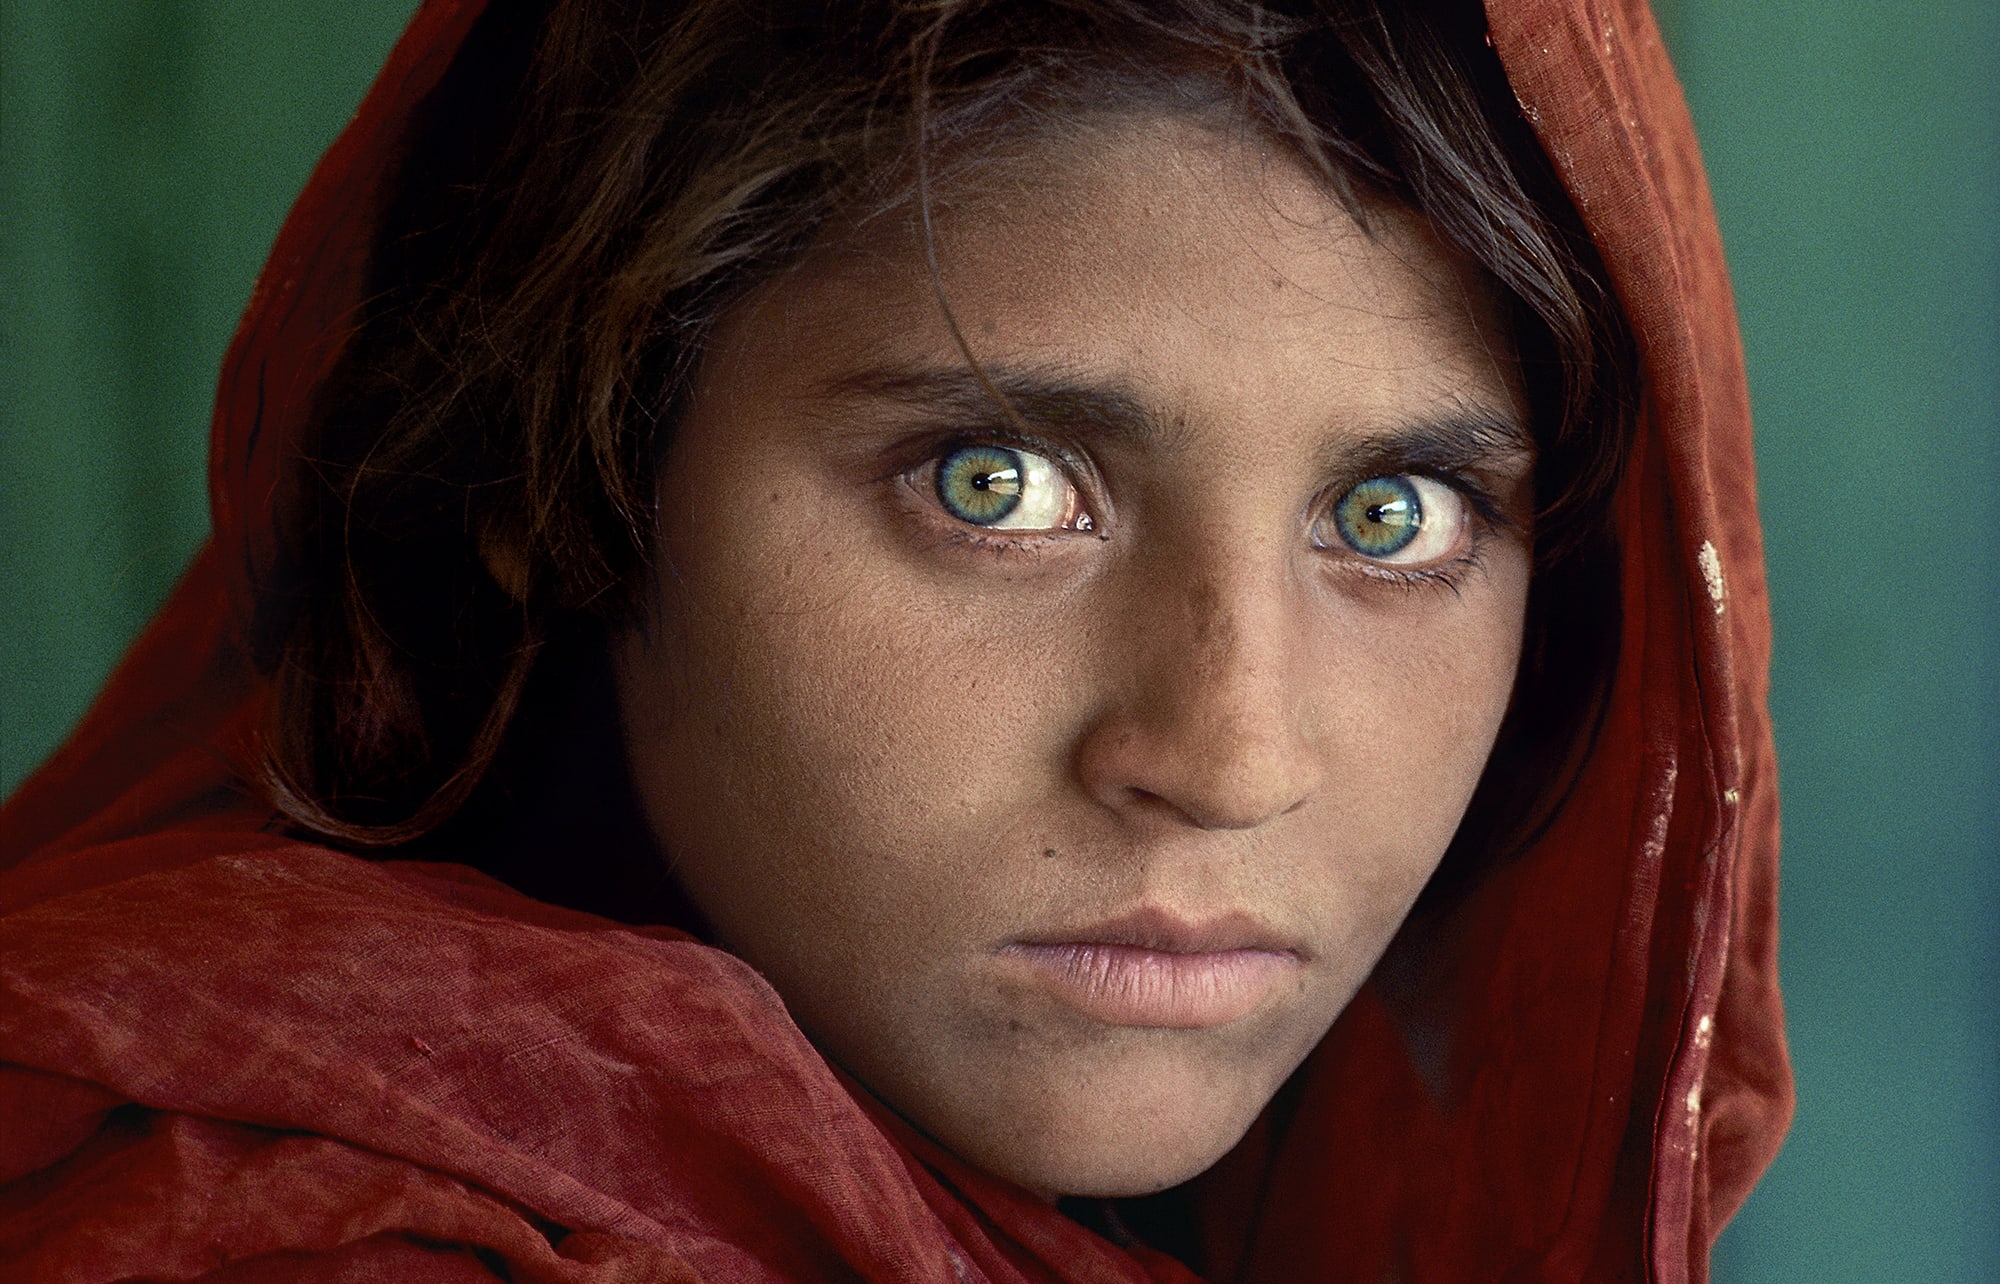 Sharbat Gula, ‘Afghan Girl’, at Nasir Bagh refugee camp near Peshawar, Pakistan, 1984.